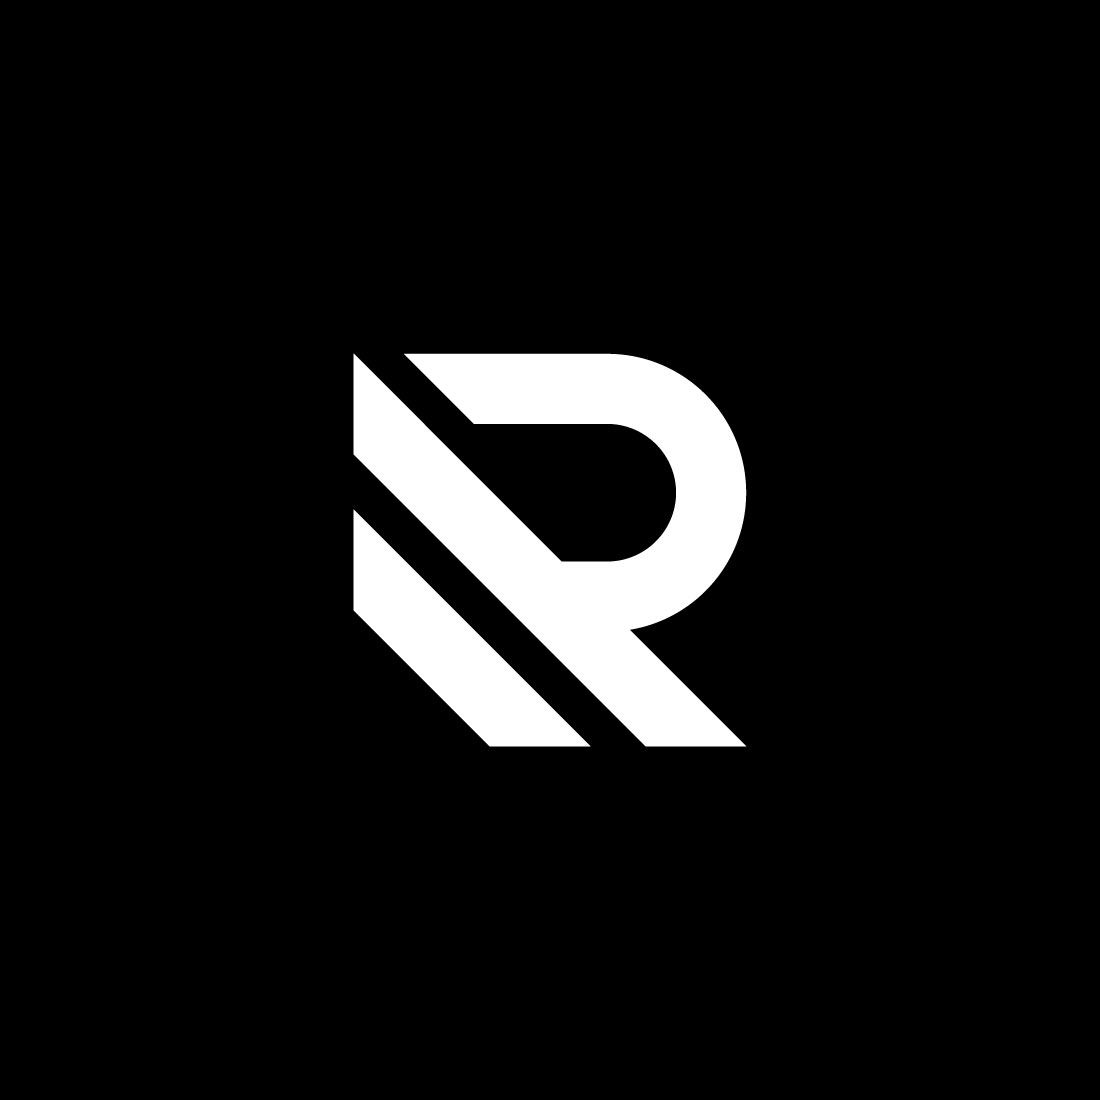 Simple R Logo Design cover image.